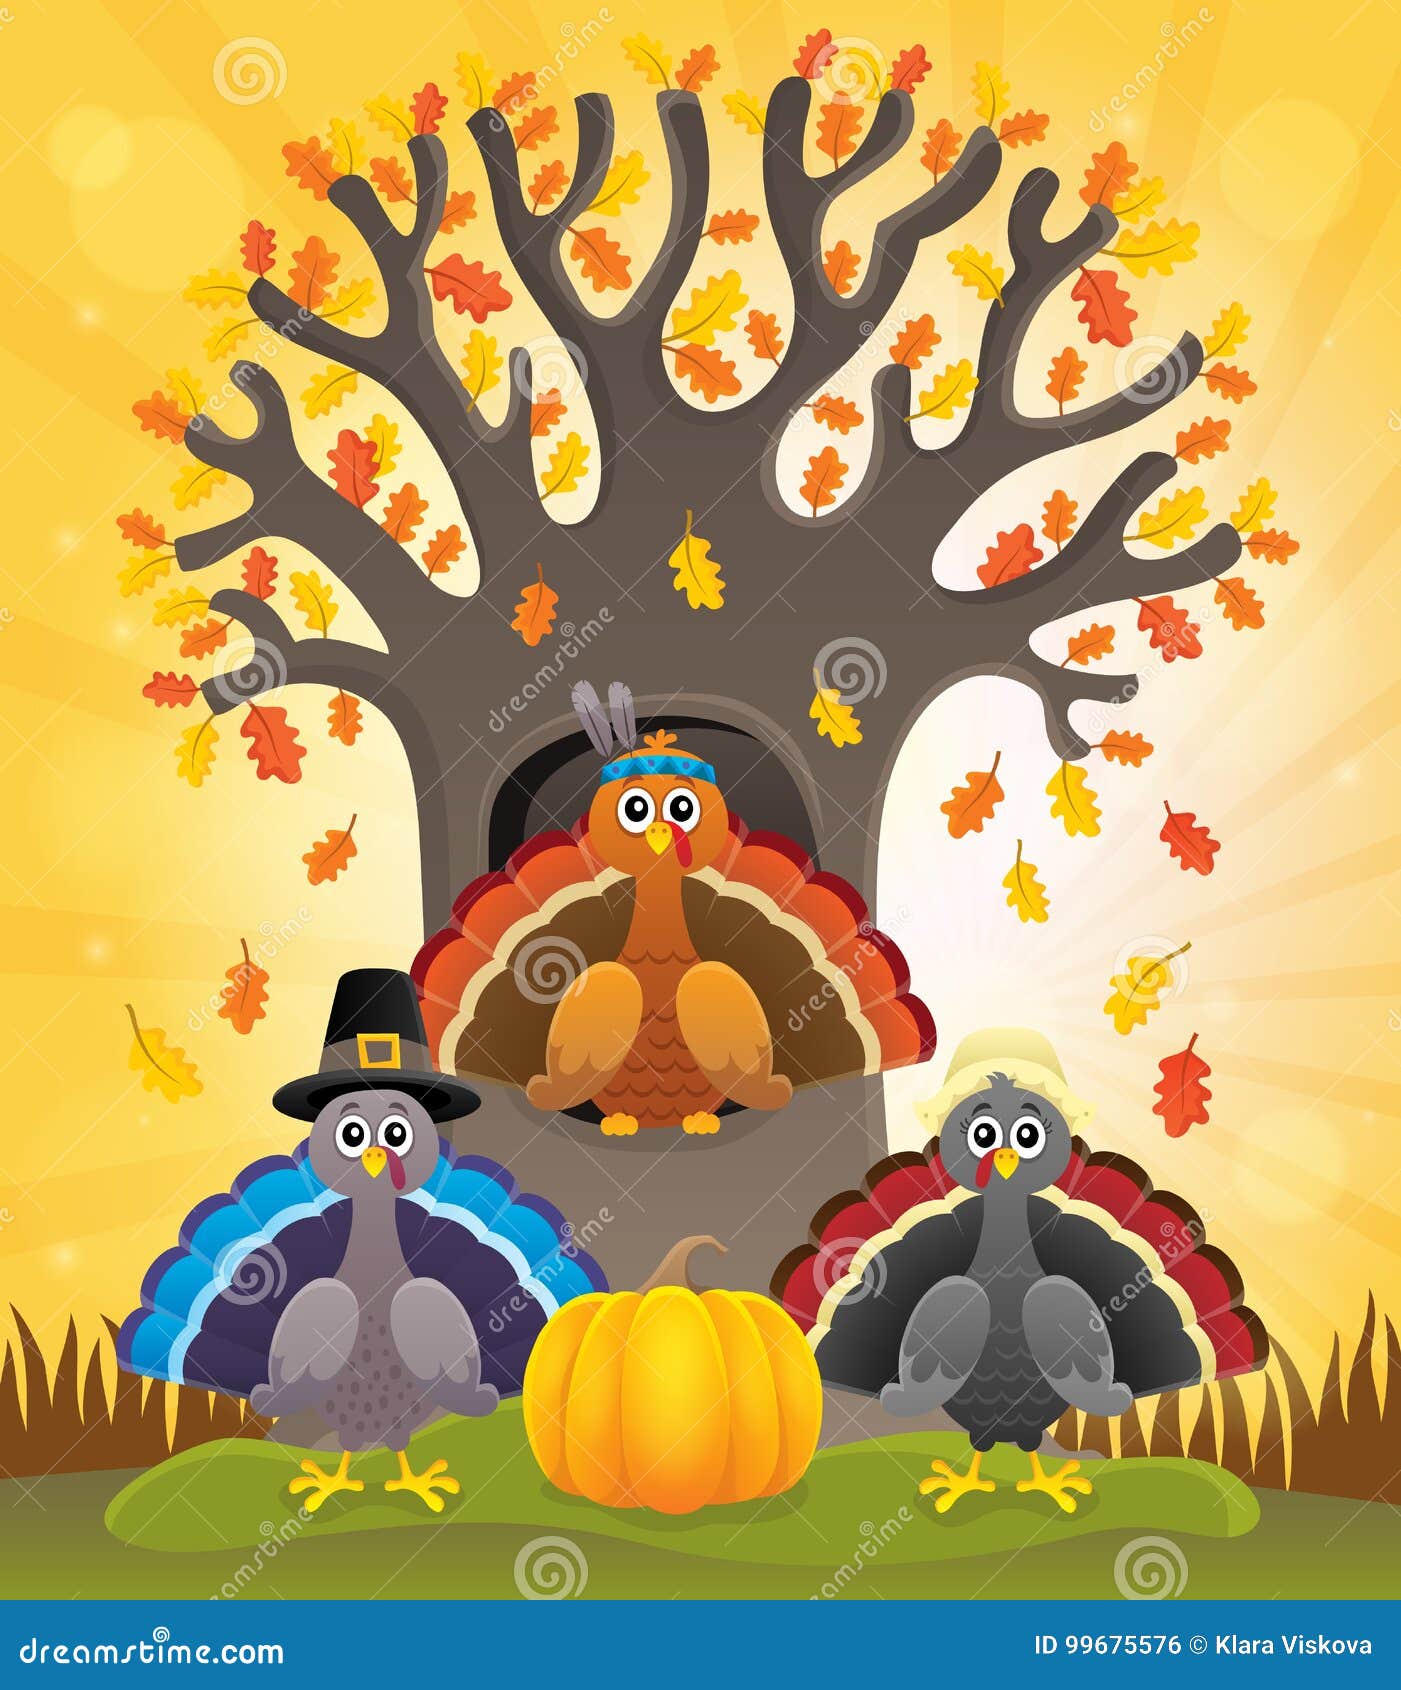 thanksgiving turkeys thematic image 2